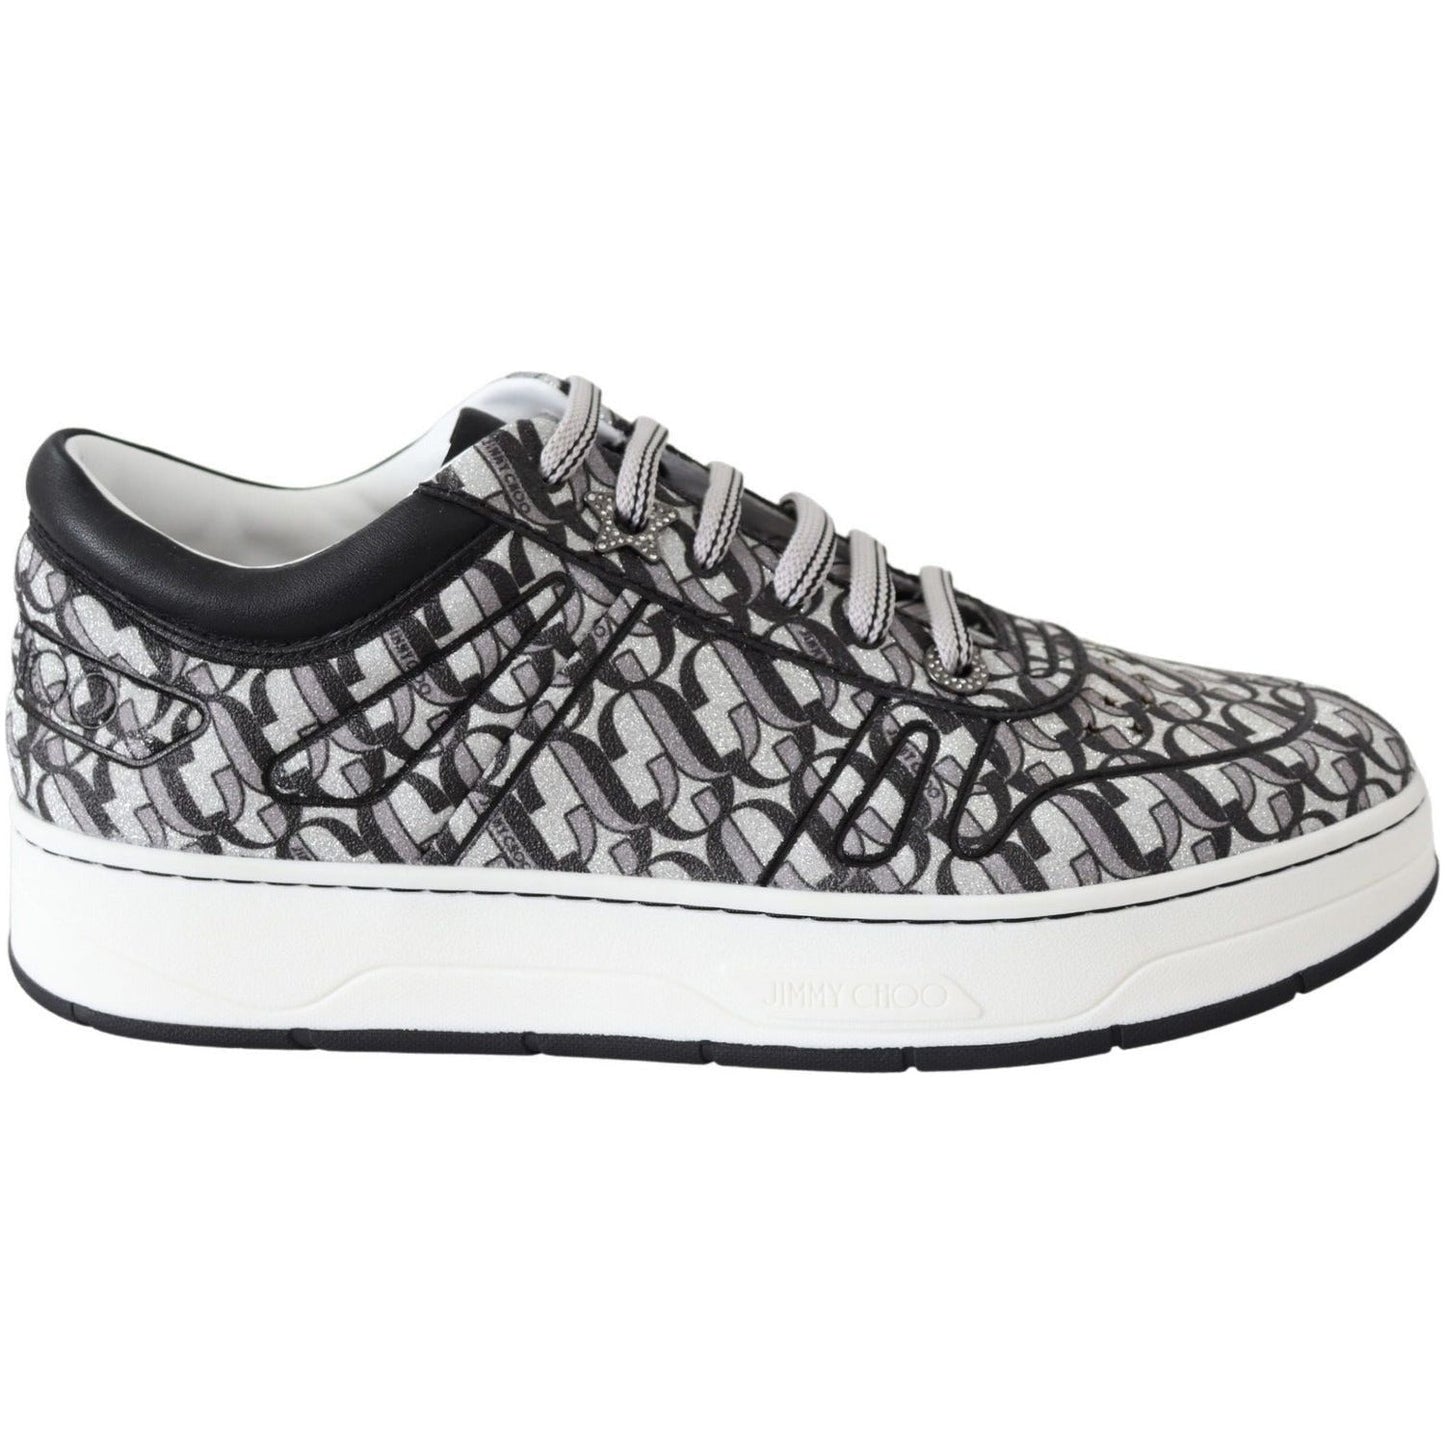 Jimmy ChooGlittering Slip-On Sneakers - Silver and BlackMcRichard Designer Brands£519.00